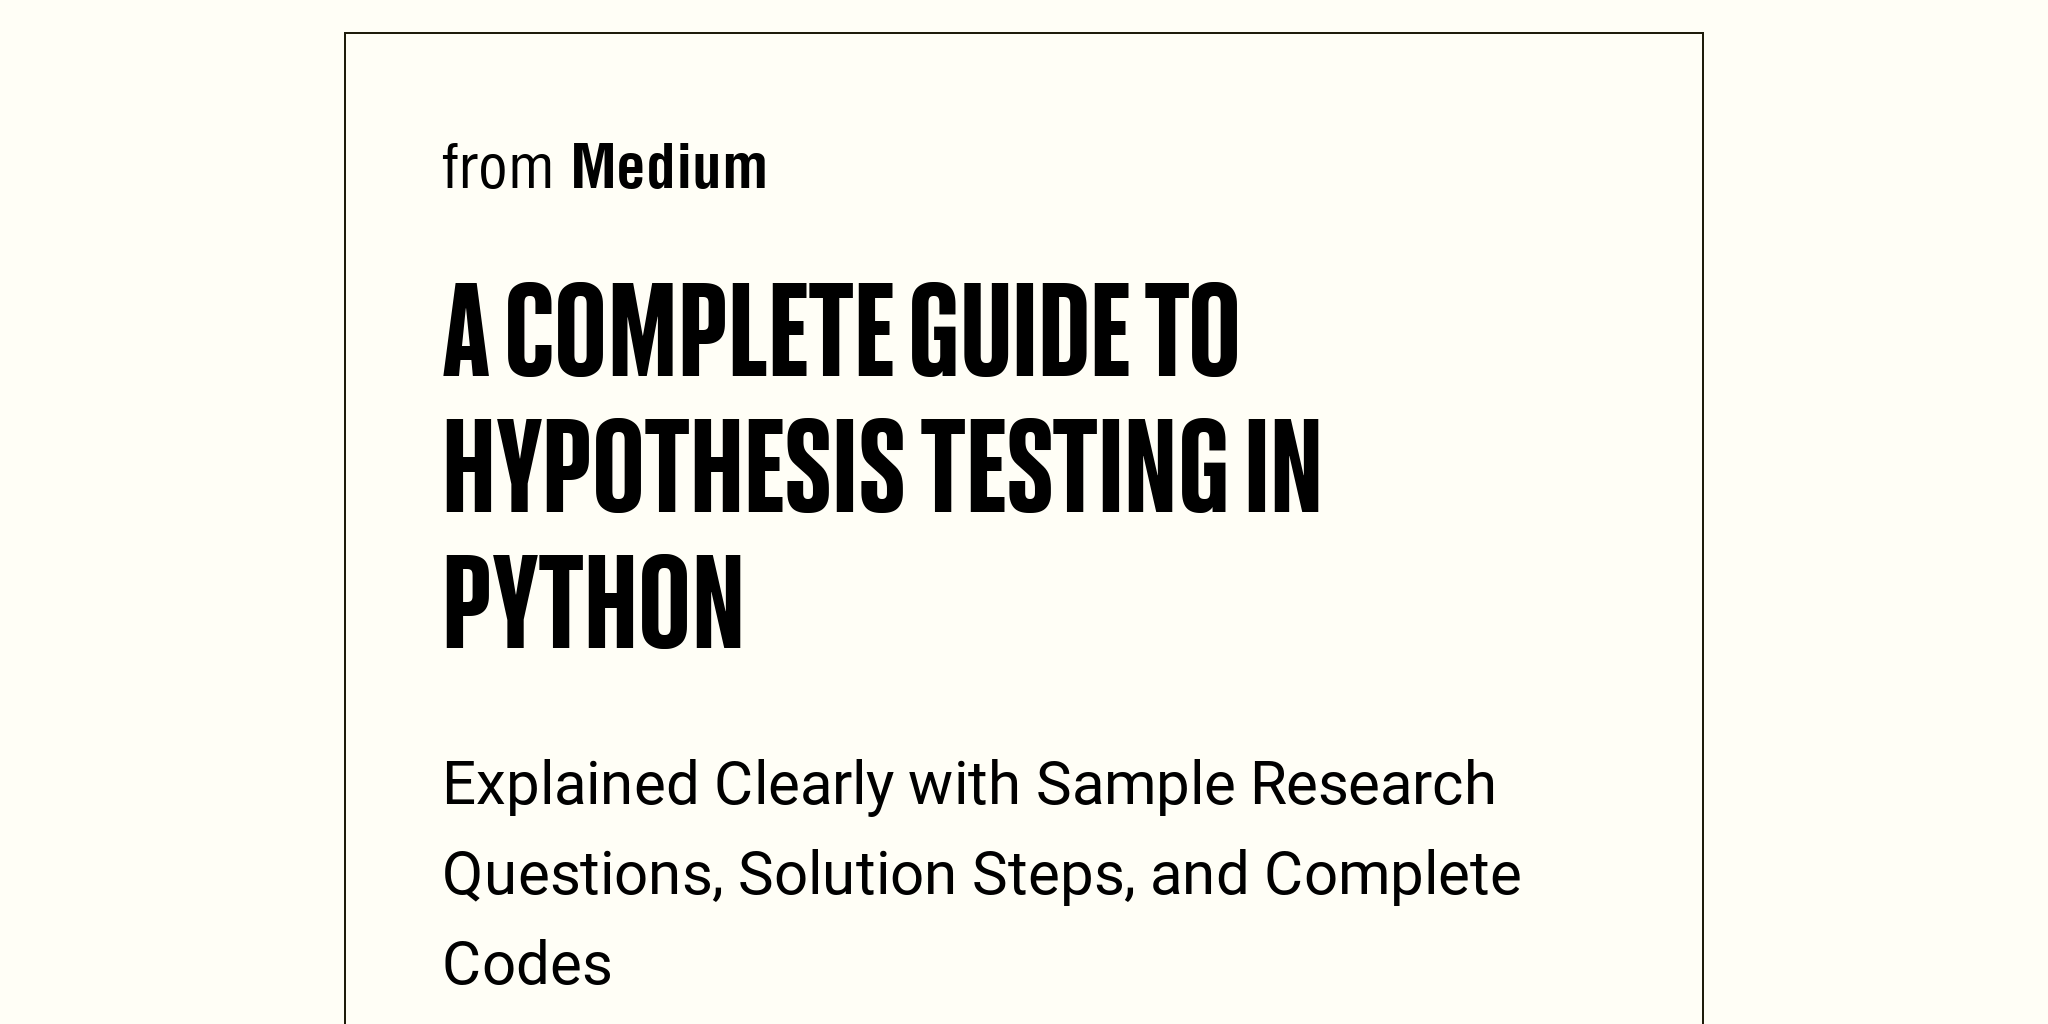 hypothesis testing categorical data python